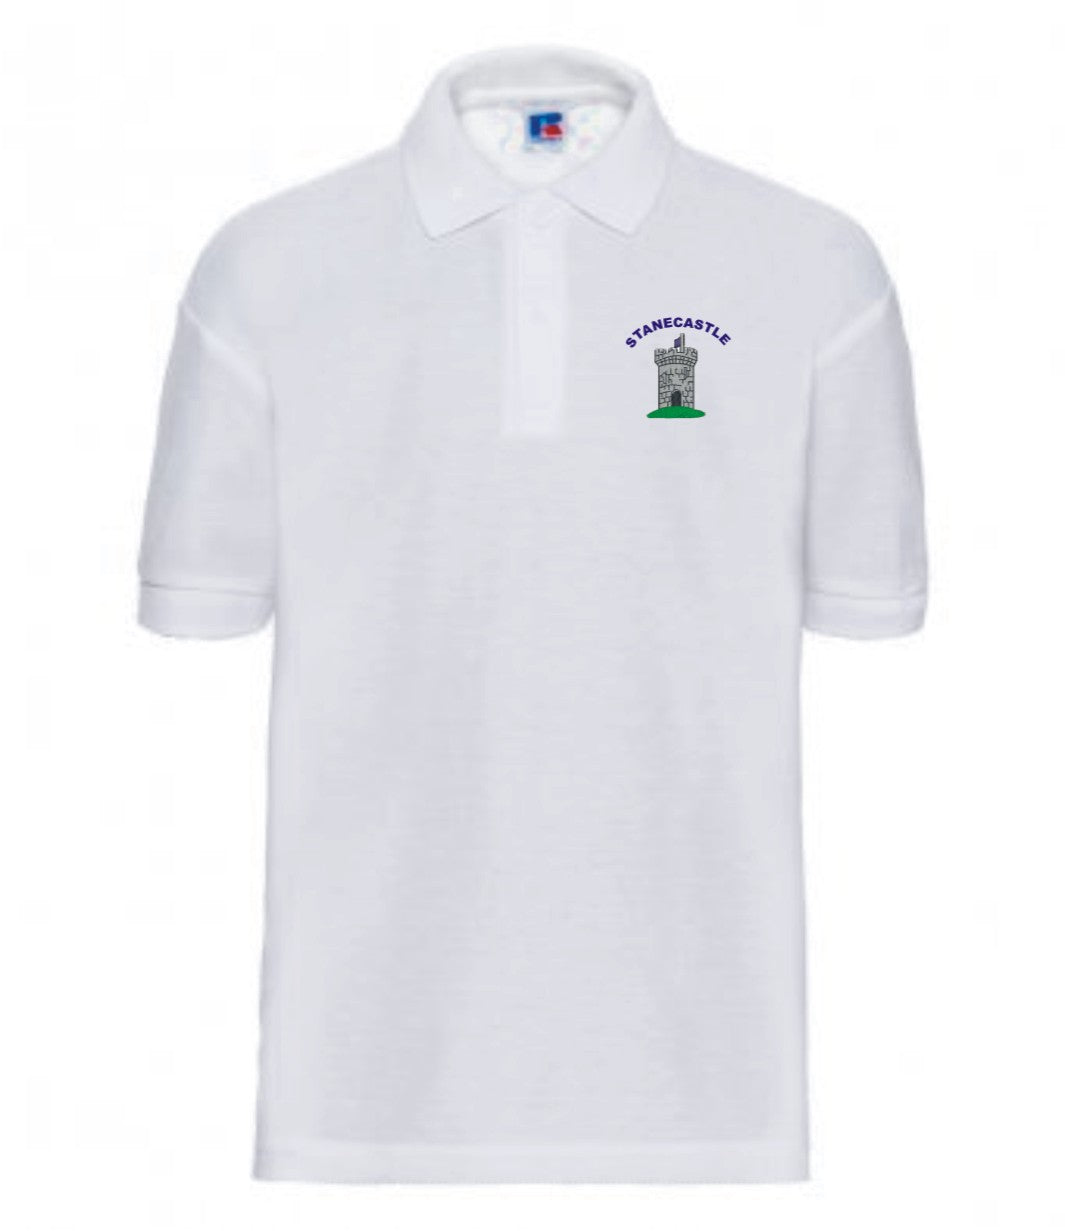 Stanecastle Primary School White Polo Shirt